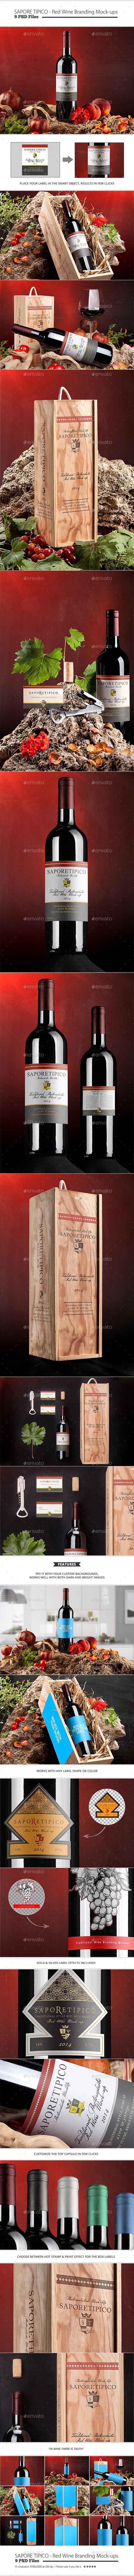 GR - Sapore Tipico - Red Wine Branding Mock-ups 9244703